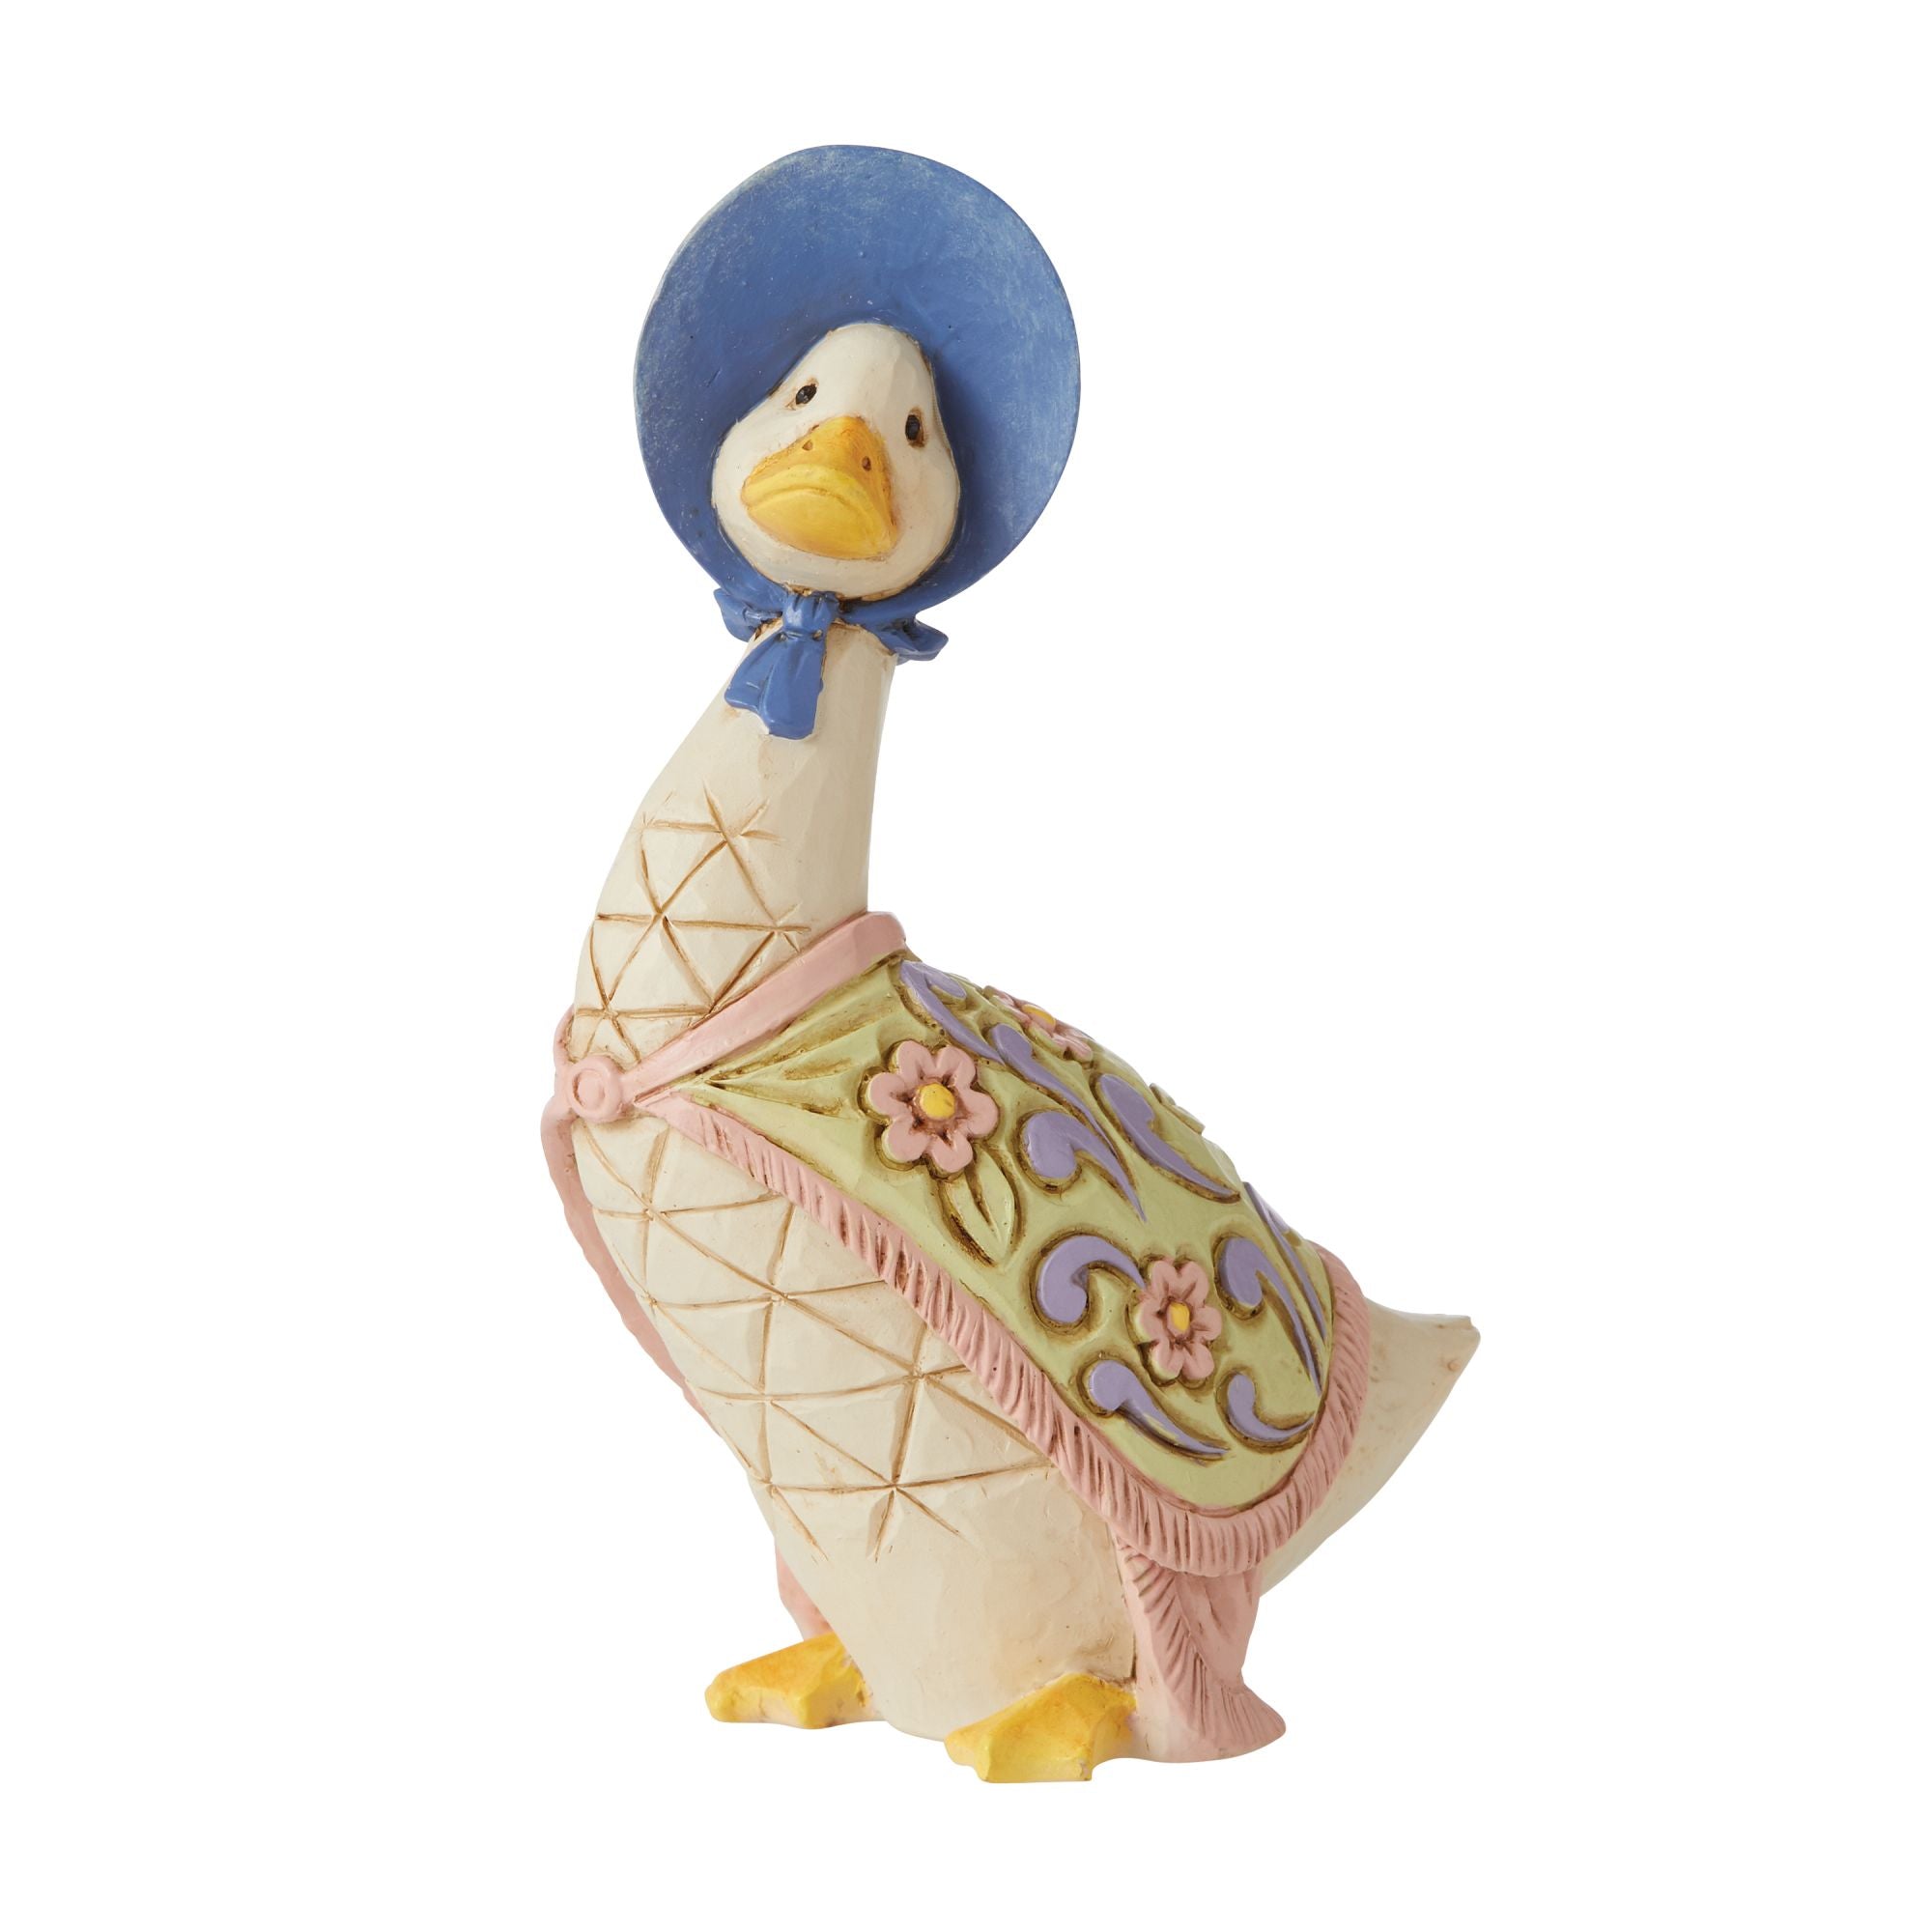 Mini Jemima Puddle-Duck